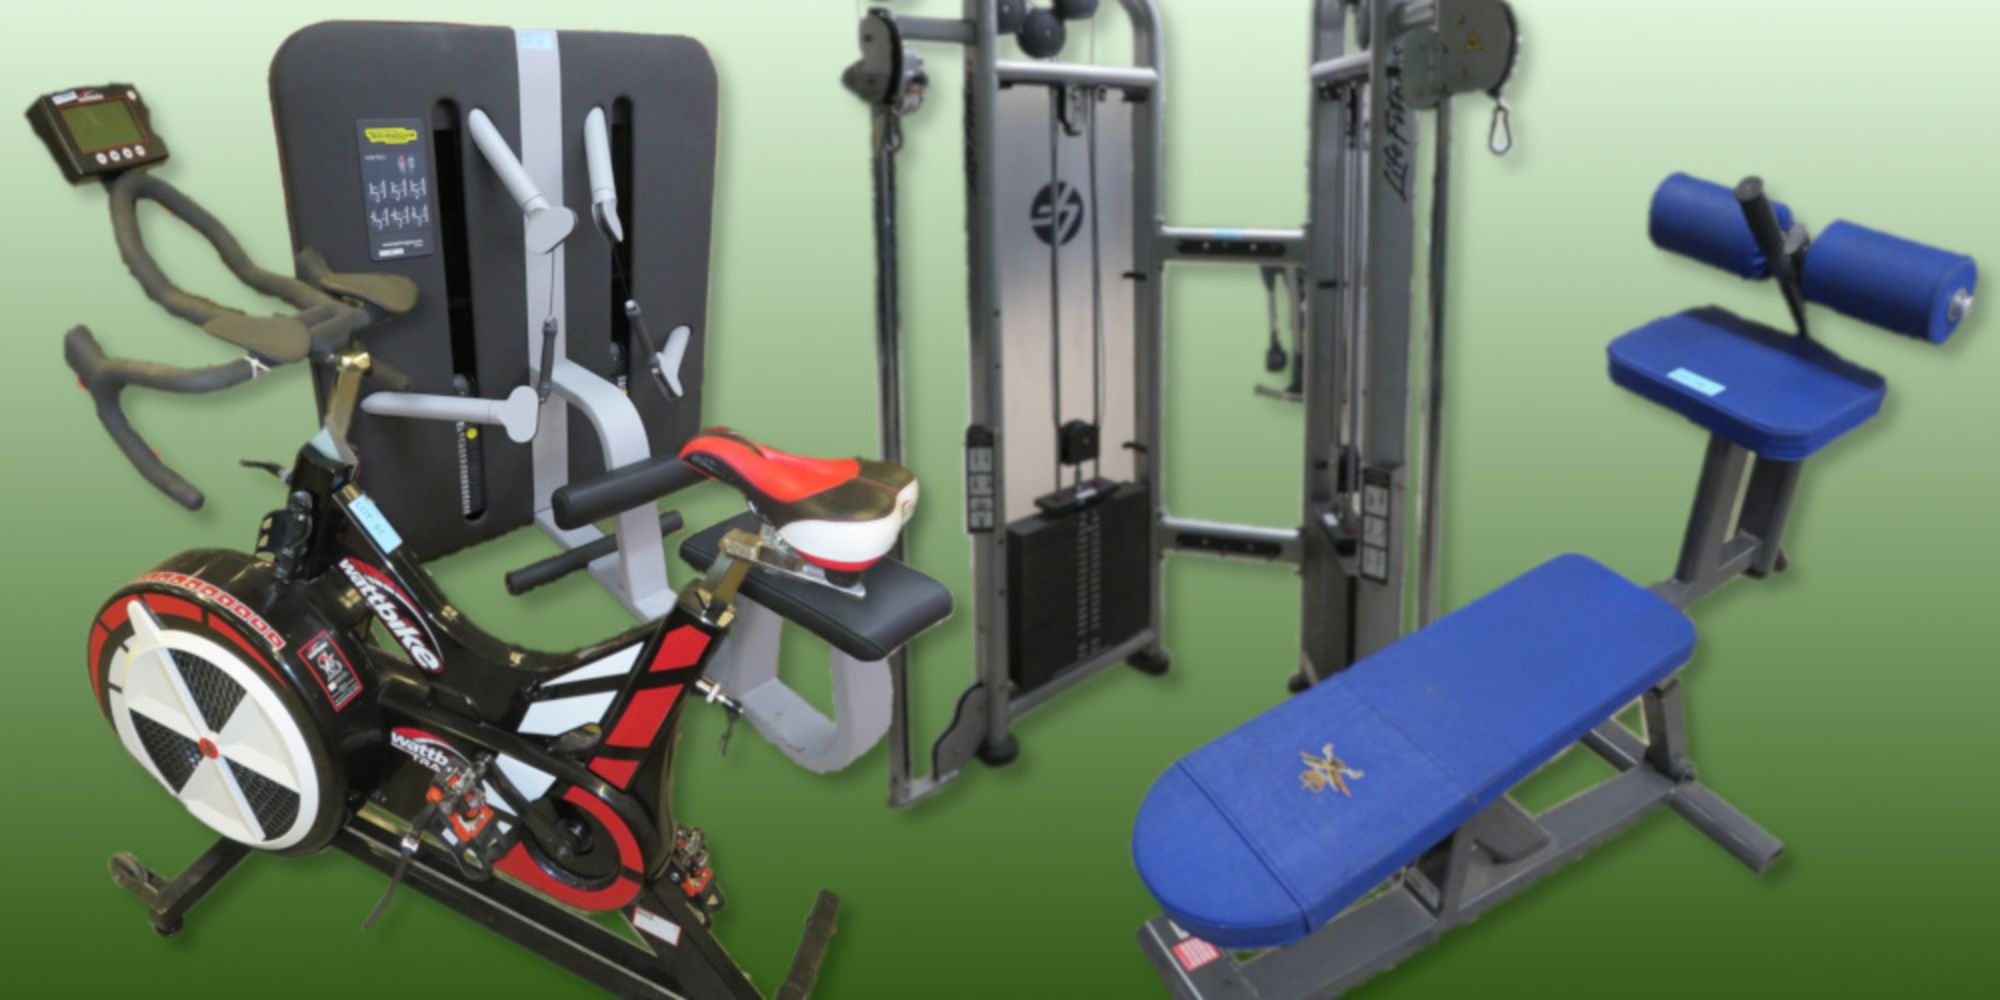 Commercial Strength & Cardio Gym Equipment Auction To Include Brands - Hammer Strength, Technogym, Life Fitness, Concept 2 & More!